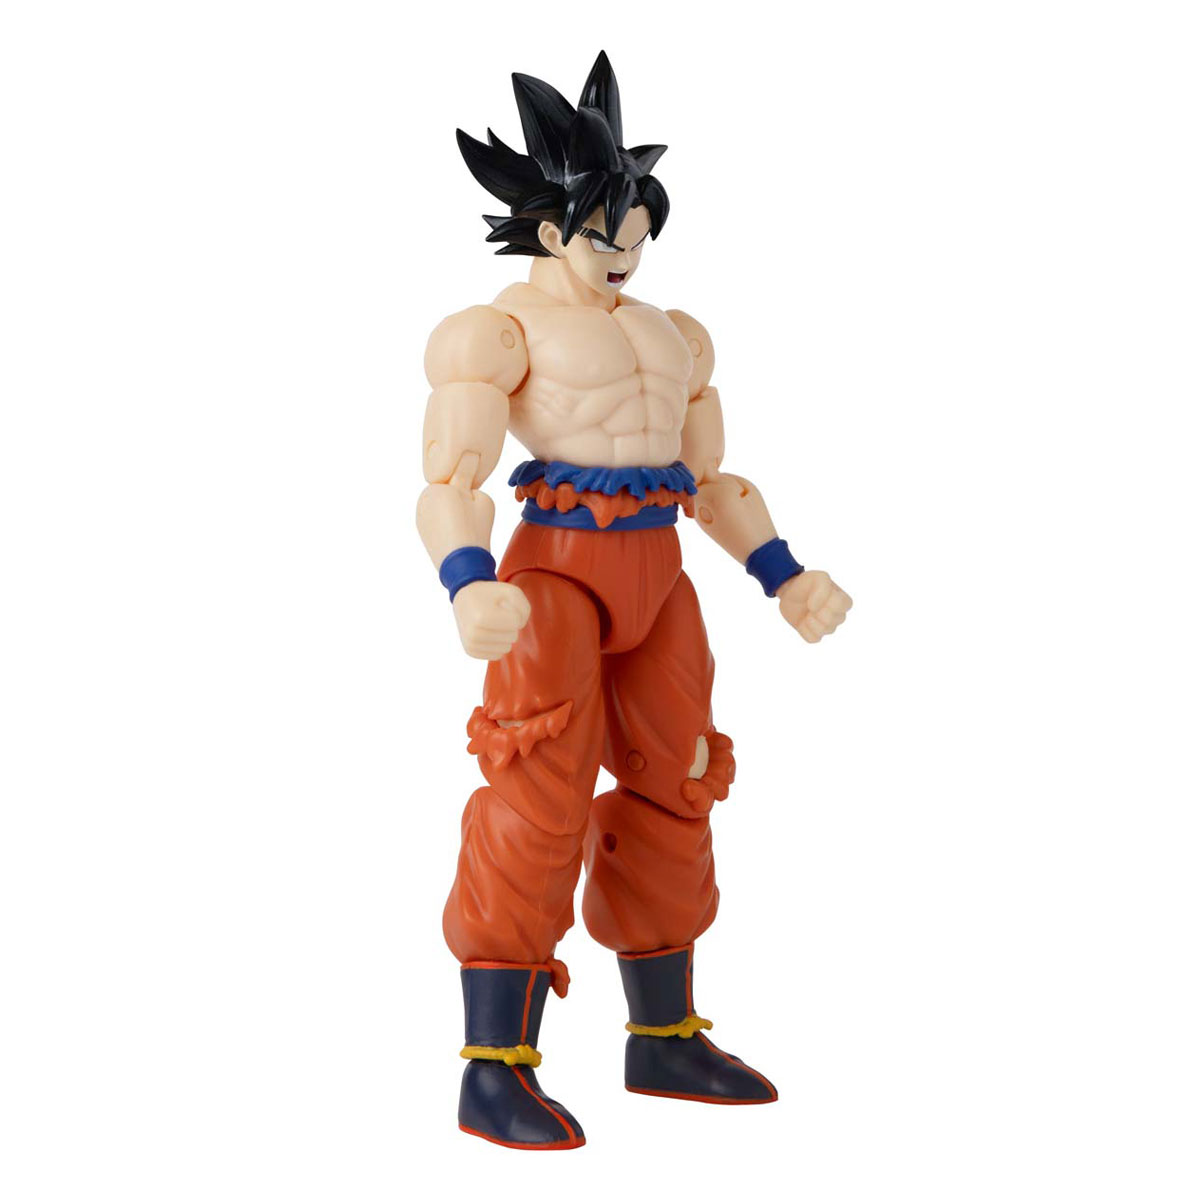 Dragon Ball Super Dragon Stars Goku Black 6.5 inch Action Figure